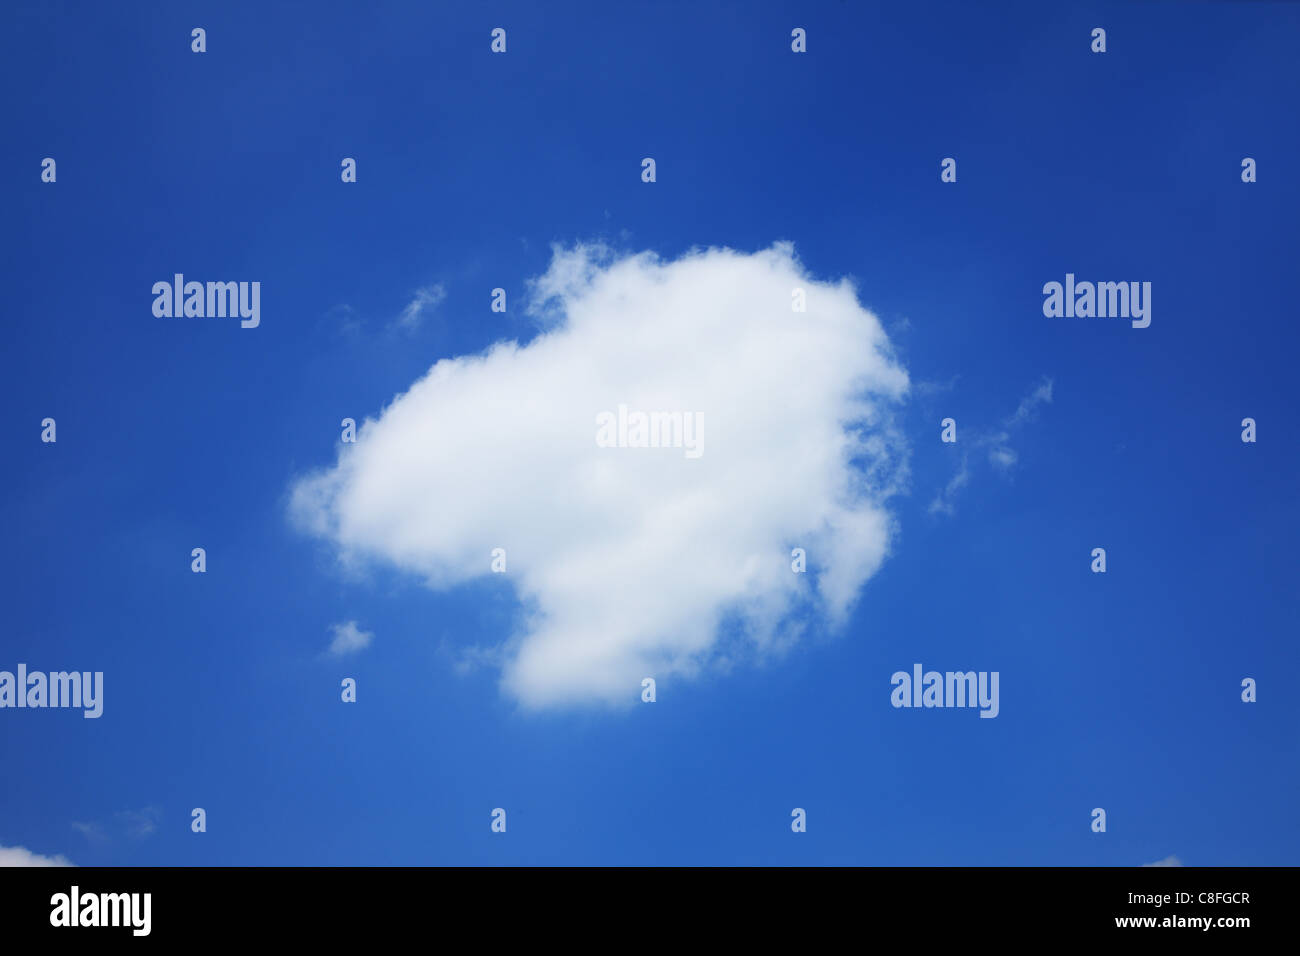 Natur, Meteorologie, Himmel, Wolke, blau, weiß, Schweiz, Baselland, Outdoor, niemand, Horizontal Stockfoto